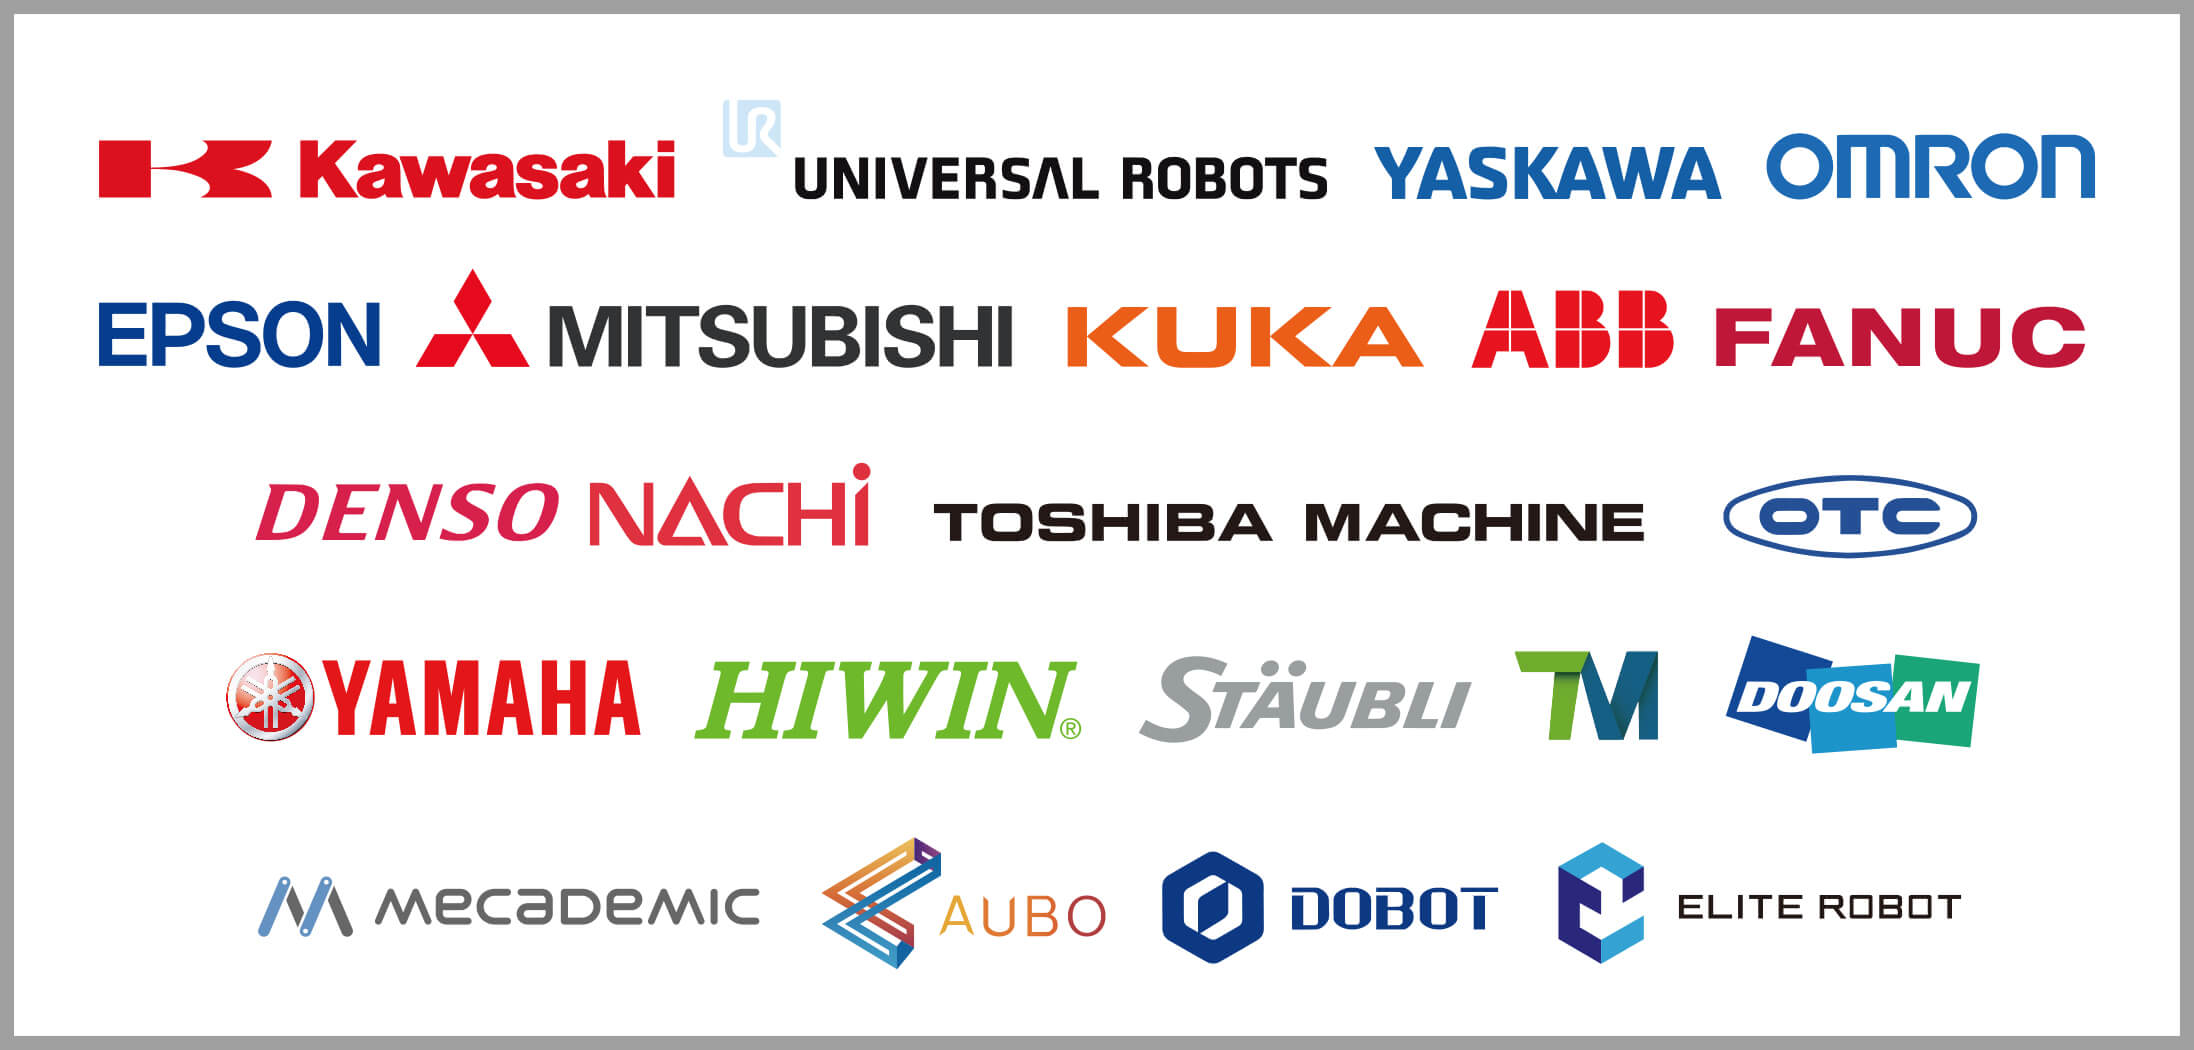 logos of robot 20 brands AccuPick 3D is compatible: Universal Robots, Kawasaki, Staubli. Yasakawa, Mecademic, Denso, ABB, Kuka, Fanuc, Mitsubishi, Nachi, Doosan, Omron, Toshiba Machine, OTC, Yamaha, Aubo, TM, Epson, and Rethink Rebotics